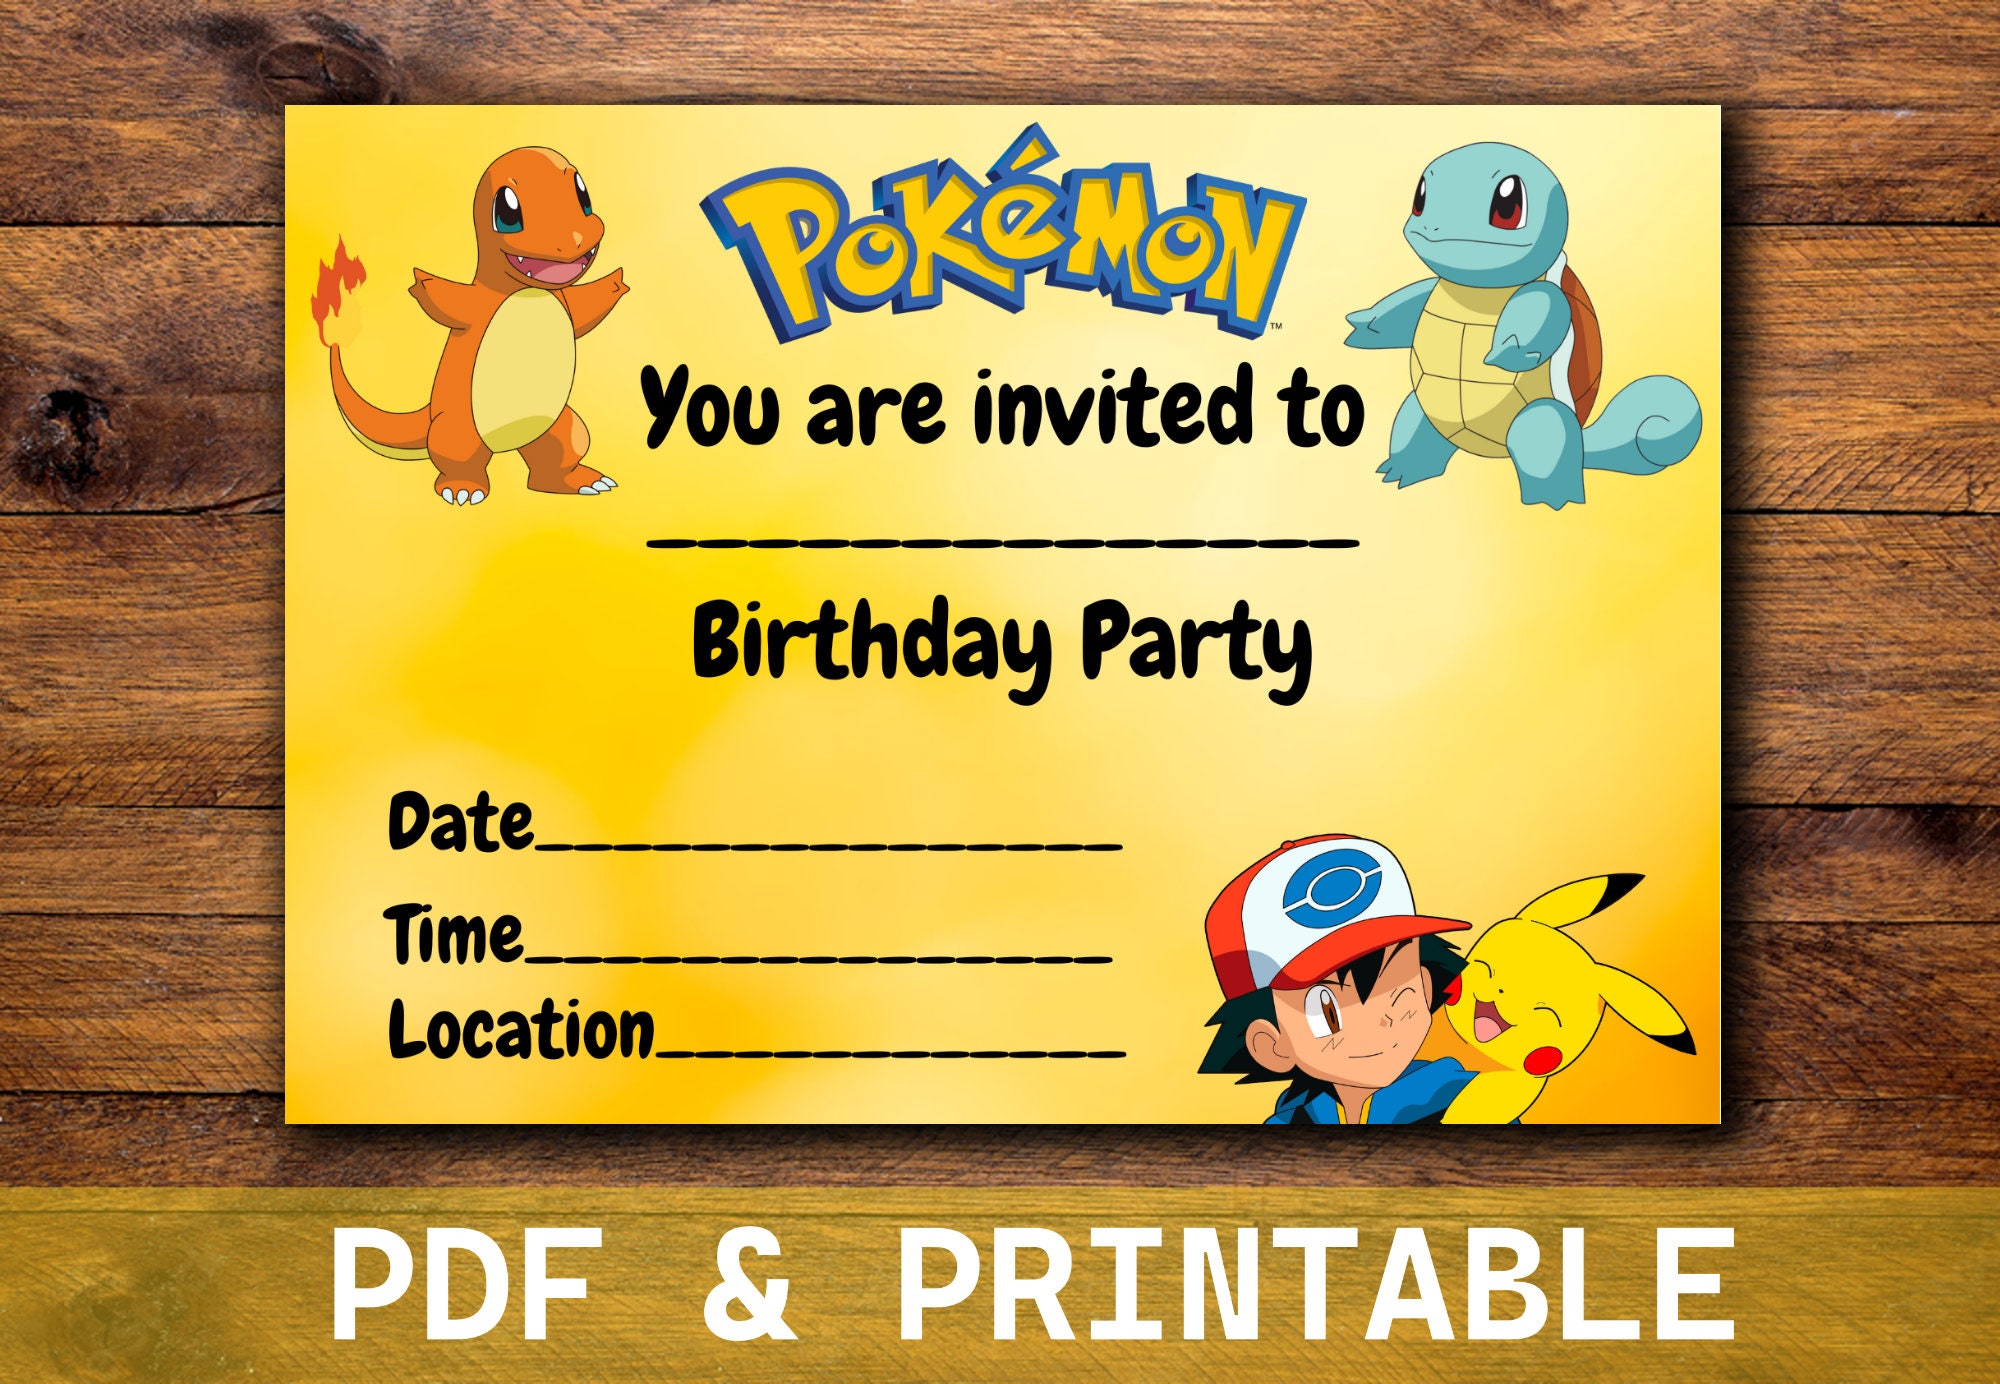 POKEMON DIGITAL PRINTABLE BIRTHDAY PARTY INVITATION